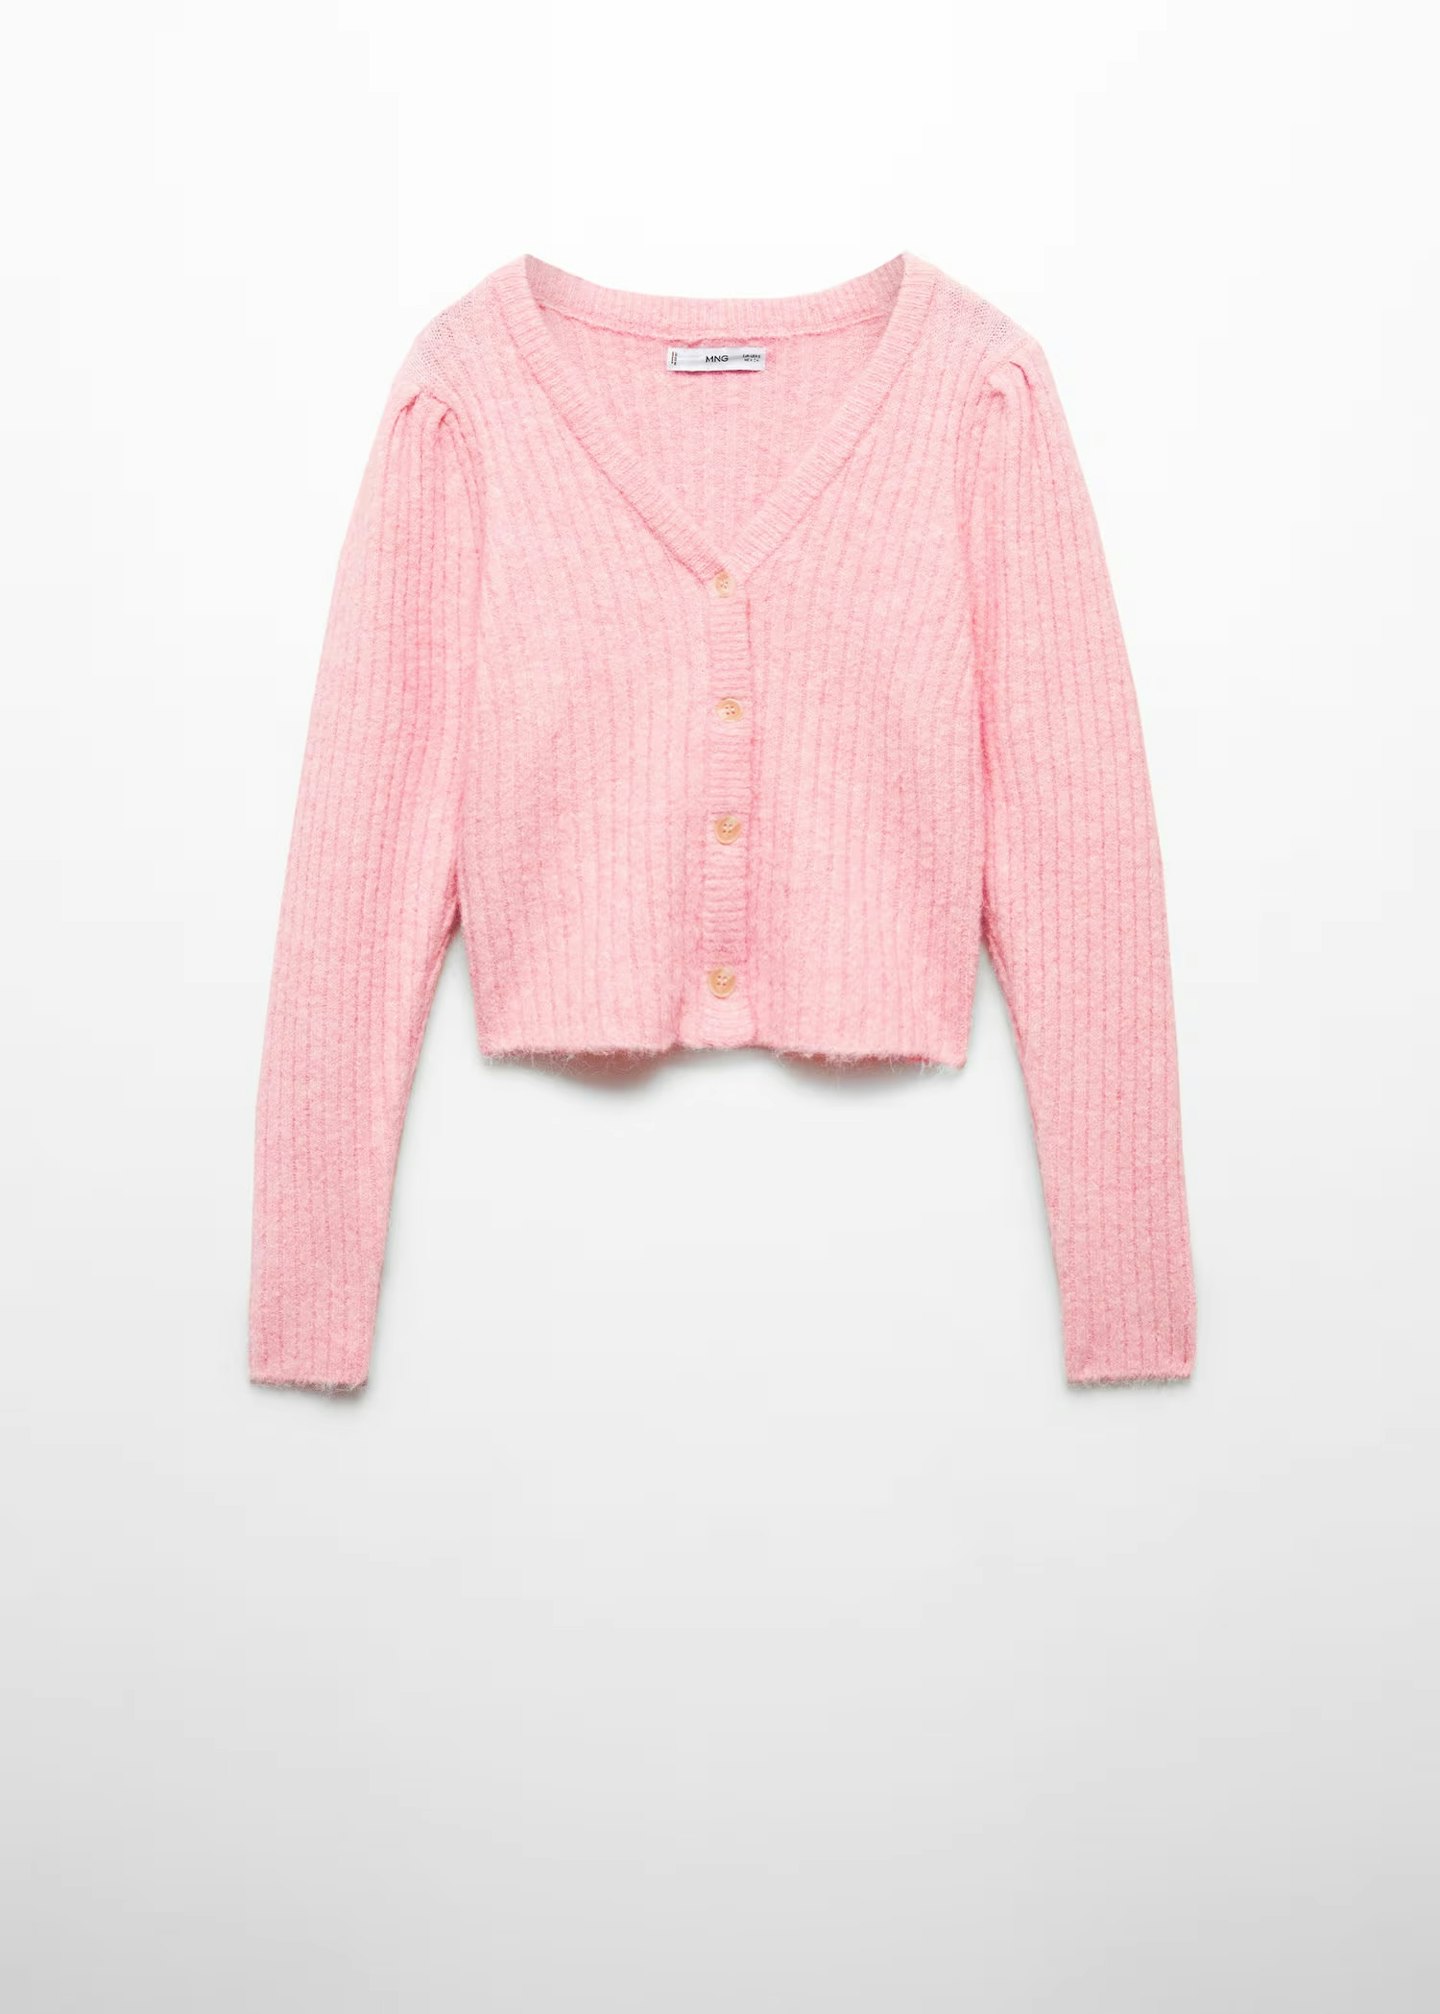 Mango pink v-neck knitted cardigan